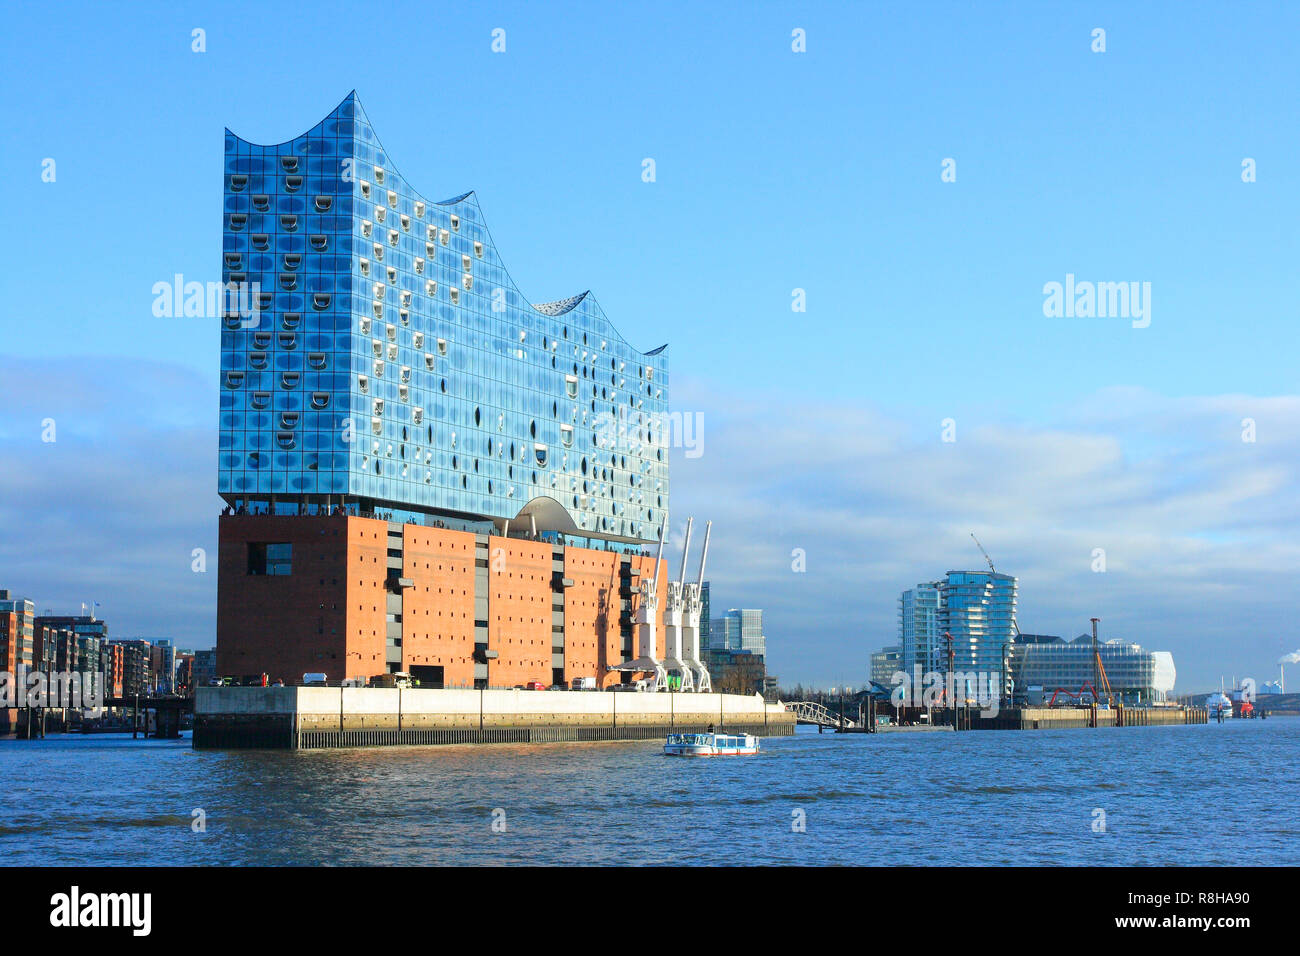 Elbphilharmonie Laeiszhalle in the Hamburg Harbour. Germany Stock Photo